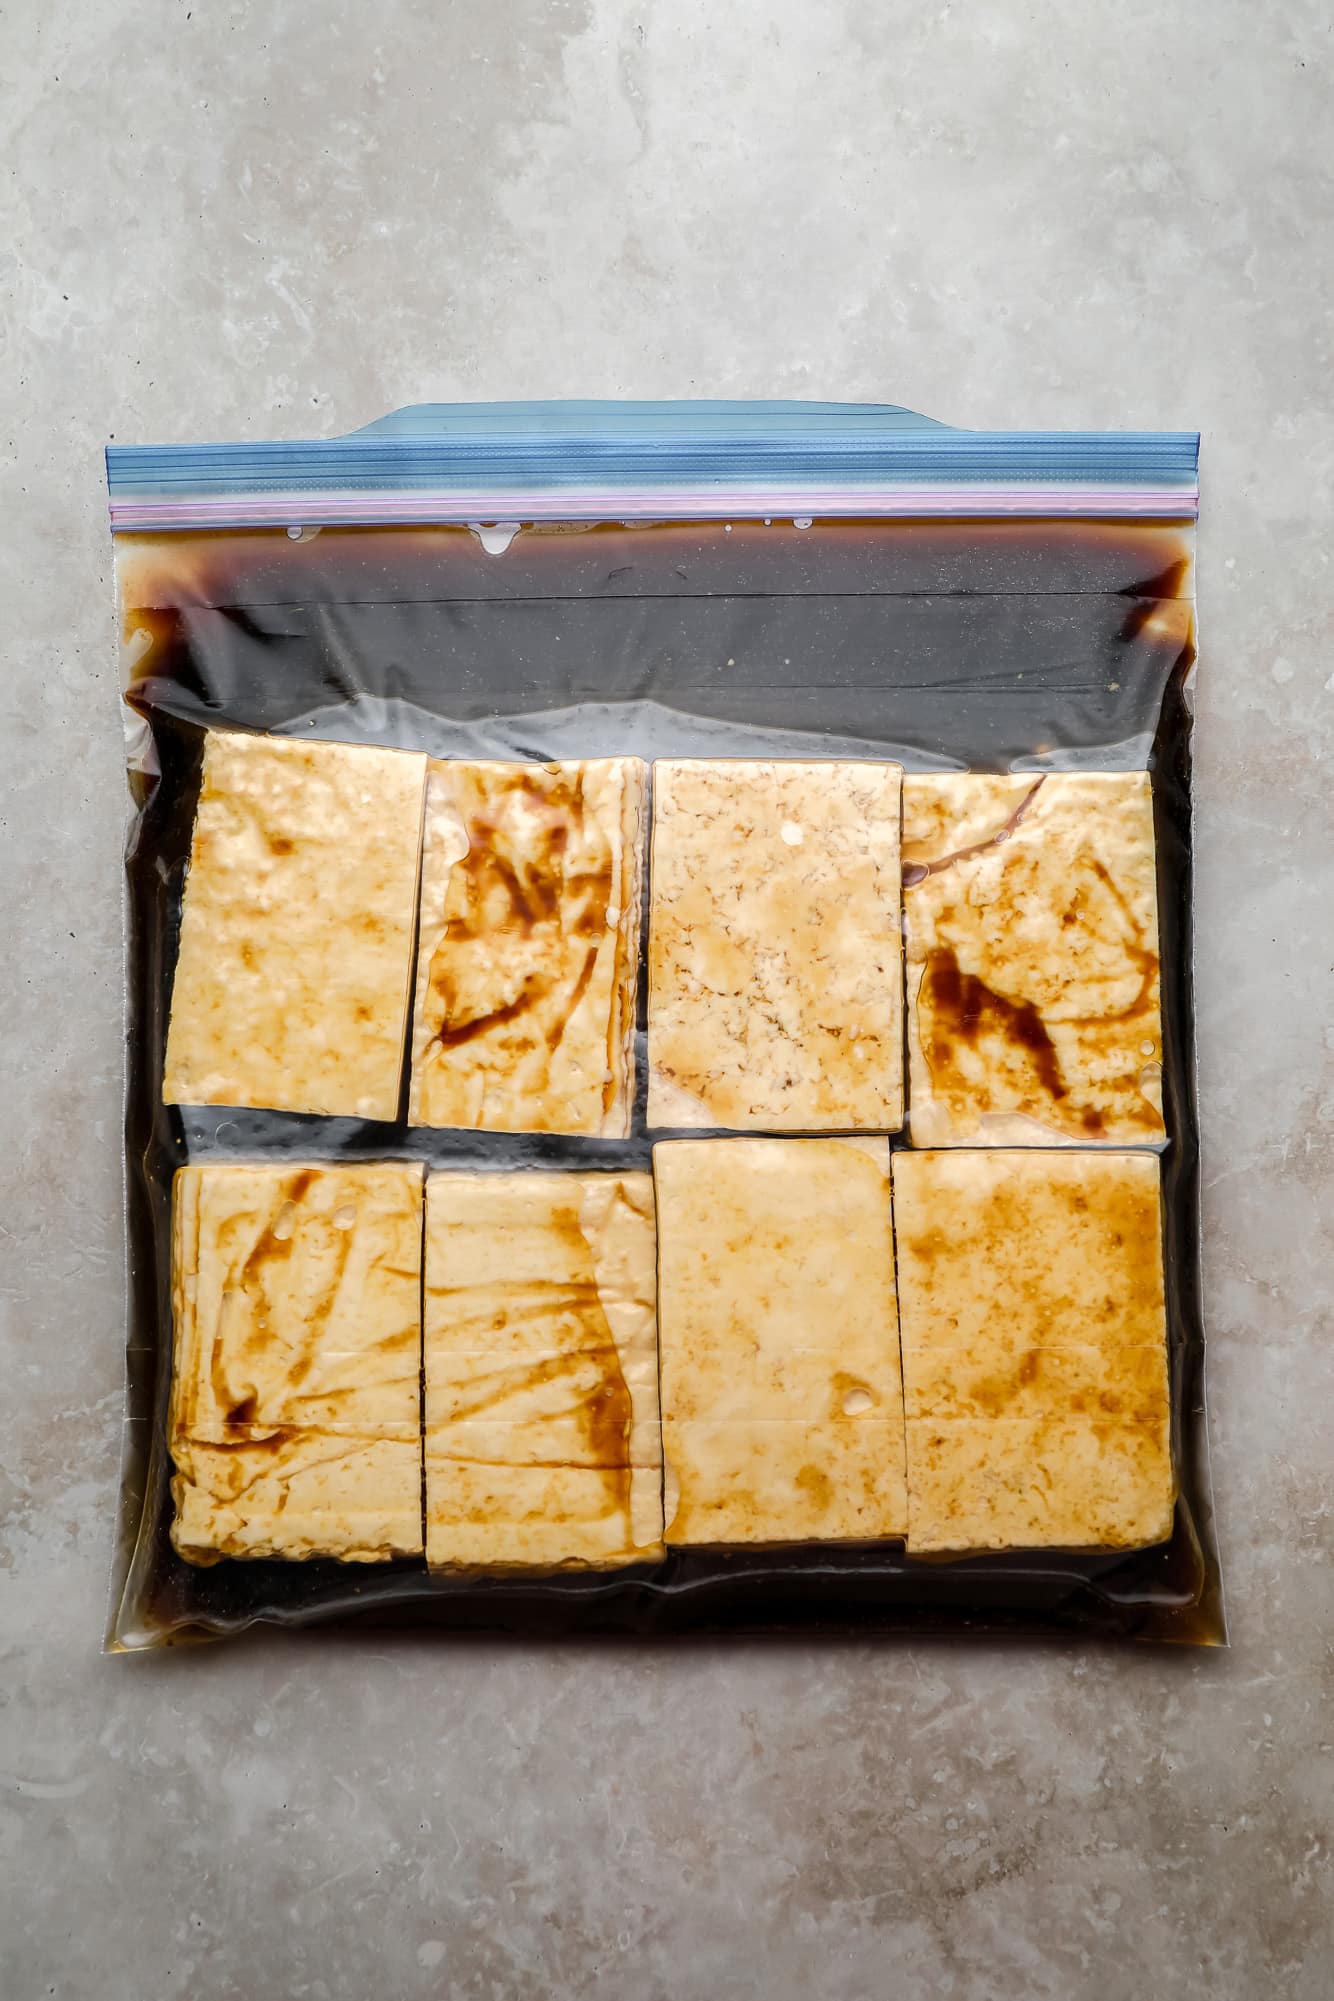 rectangular tofu pieces and a marinade in a large ziplock bag.